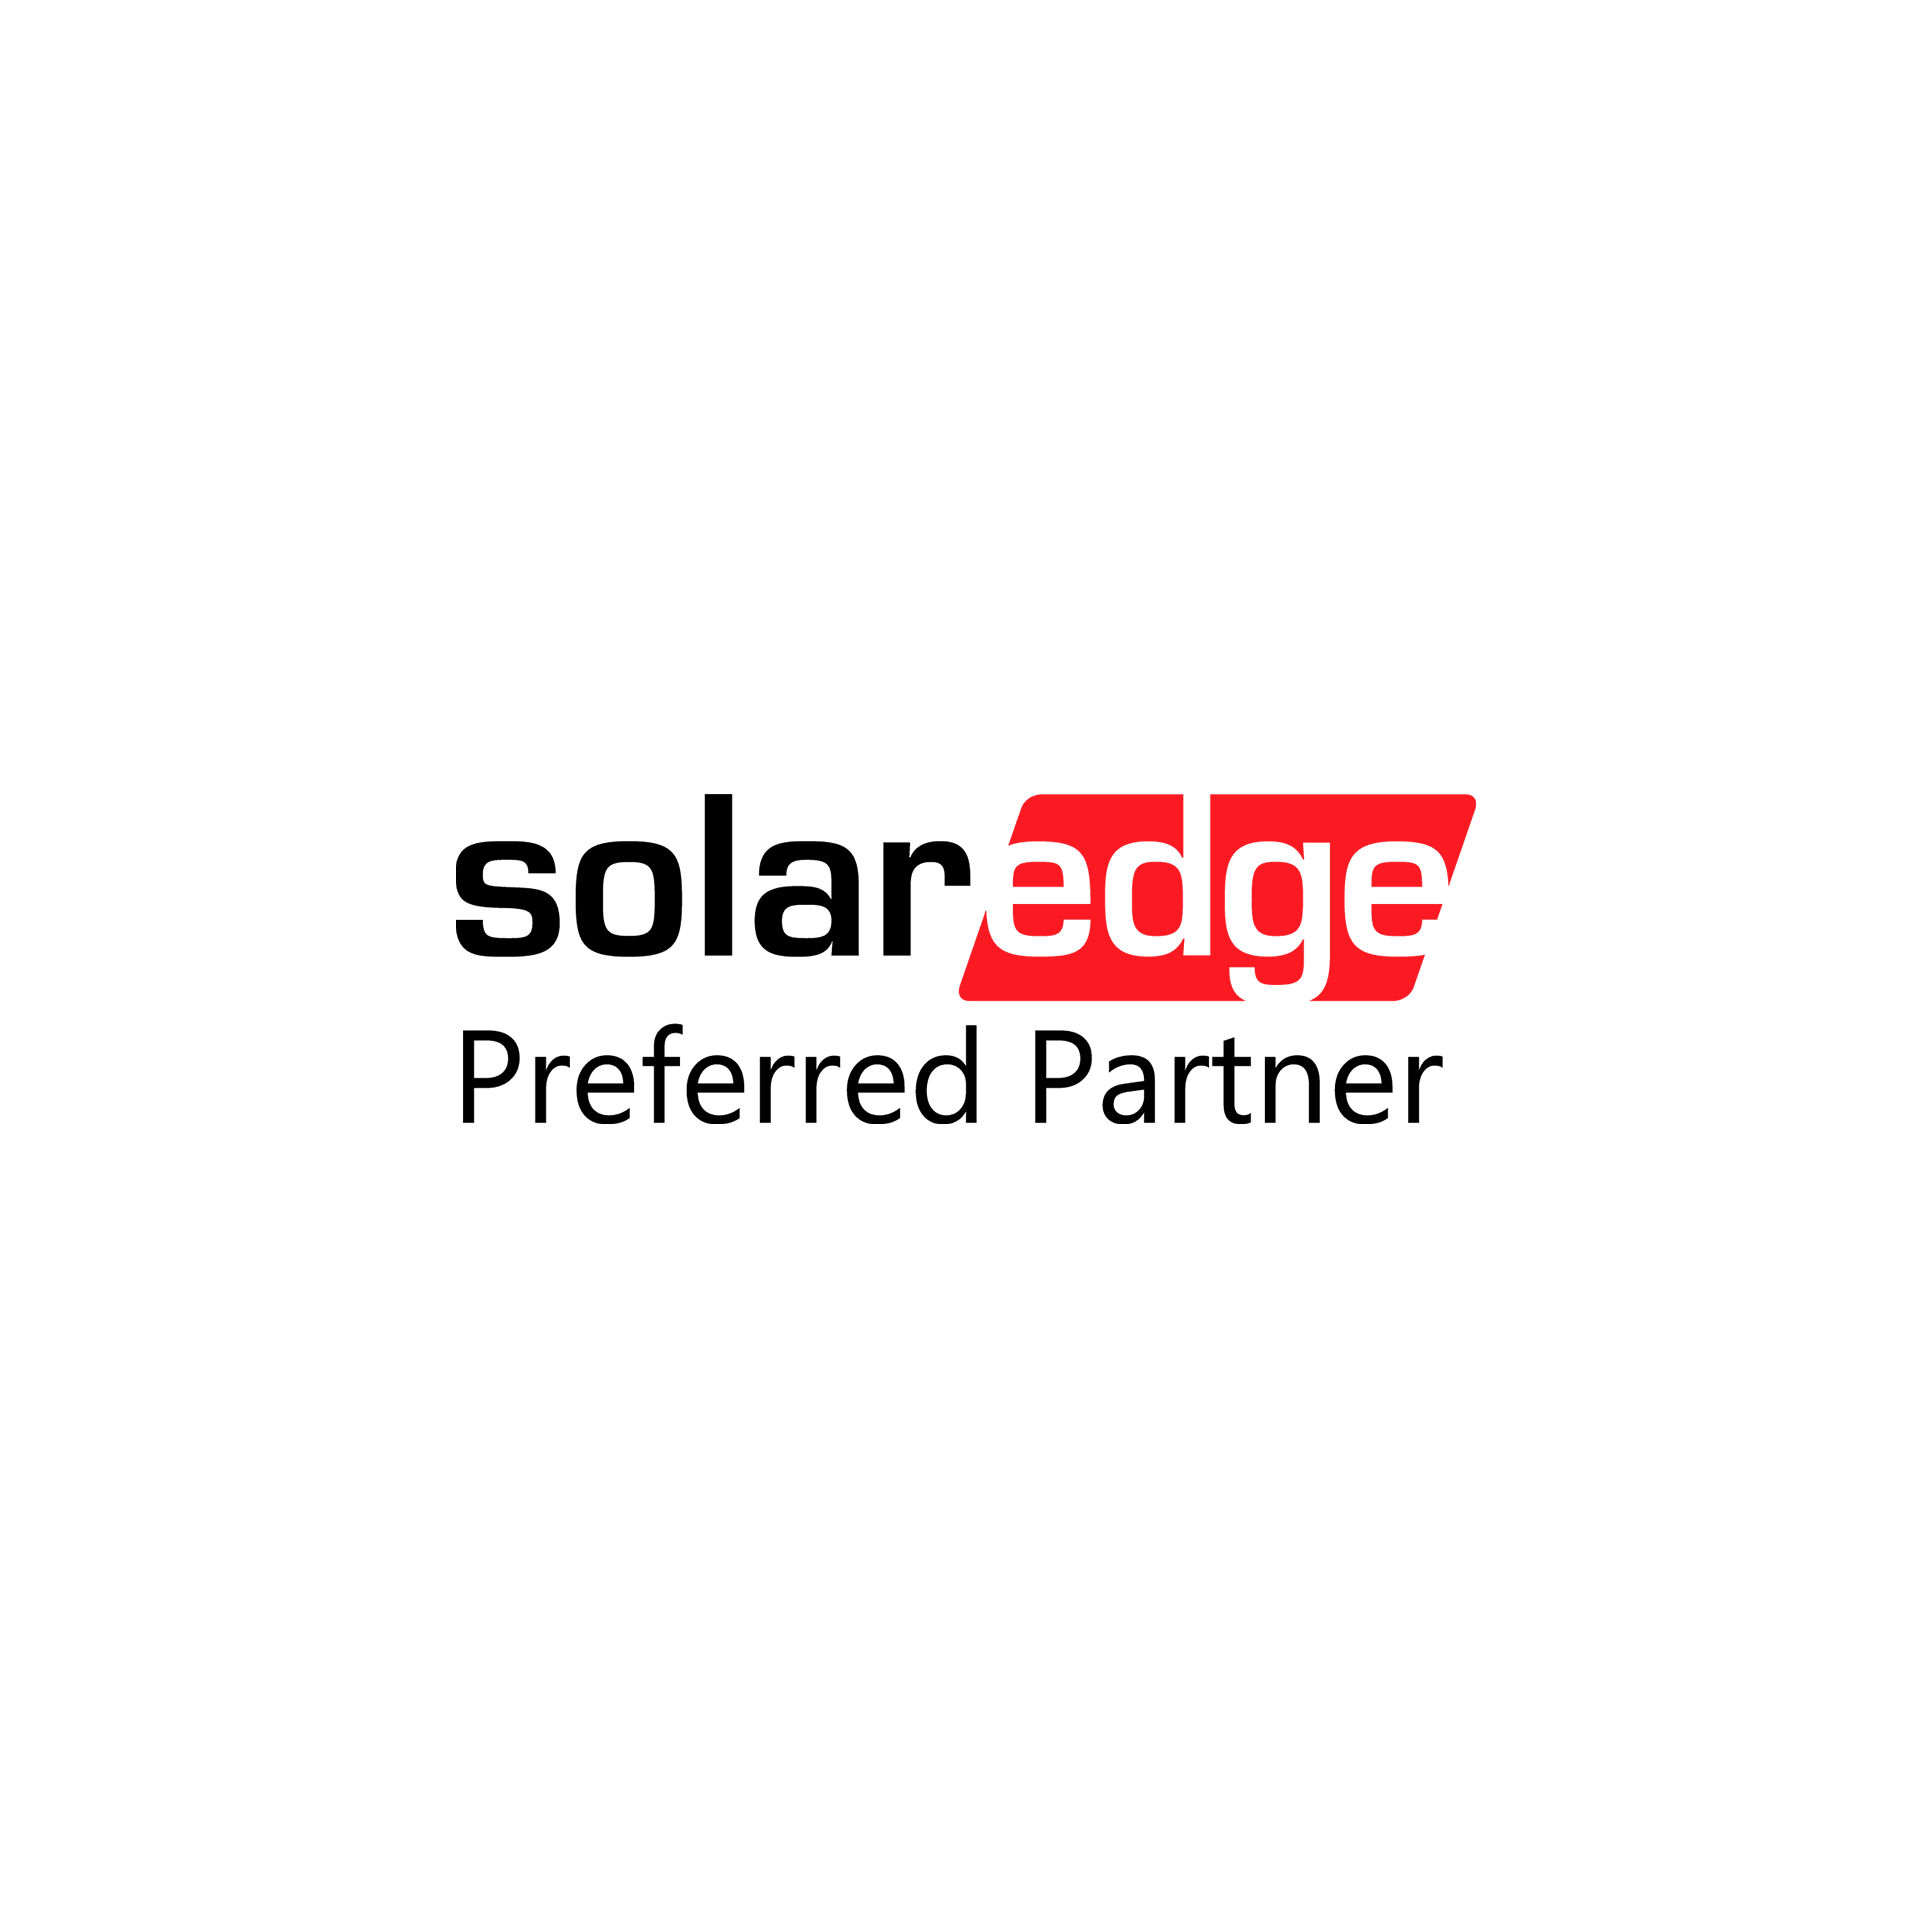 The solar edge logo is a preferred partner of solar edge.